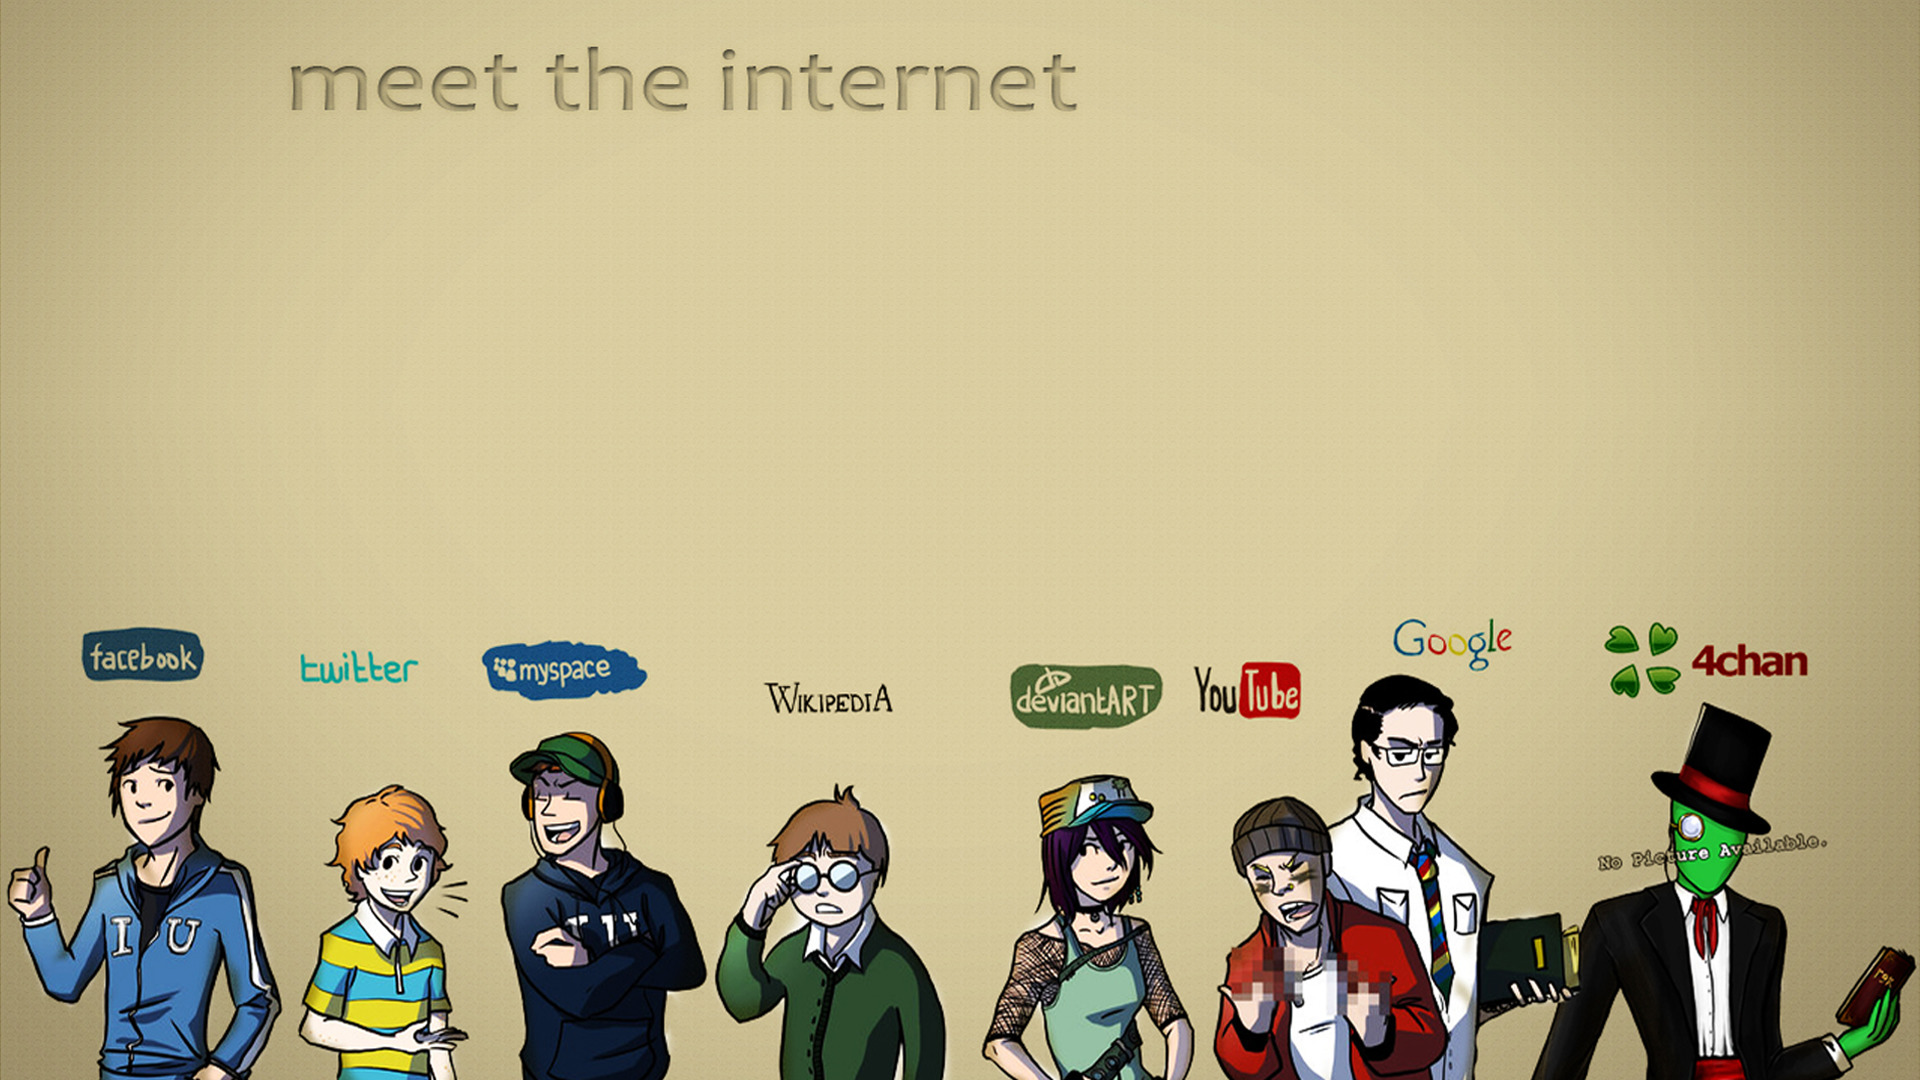 internet, Digital art, Facebook, Twitter, MySpace, Wikipedia, DeviantArt, YouTube, Google, 4chan Wallpaper